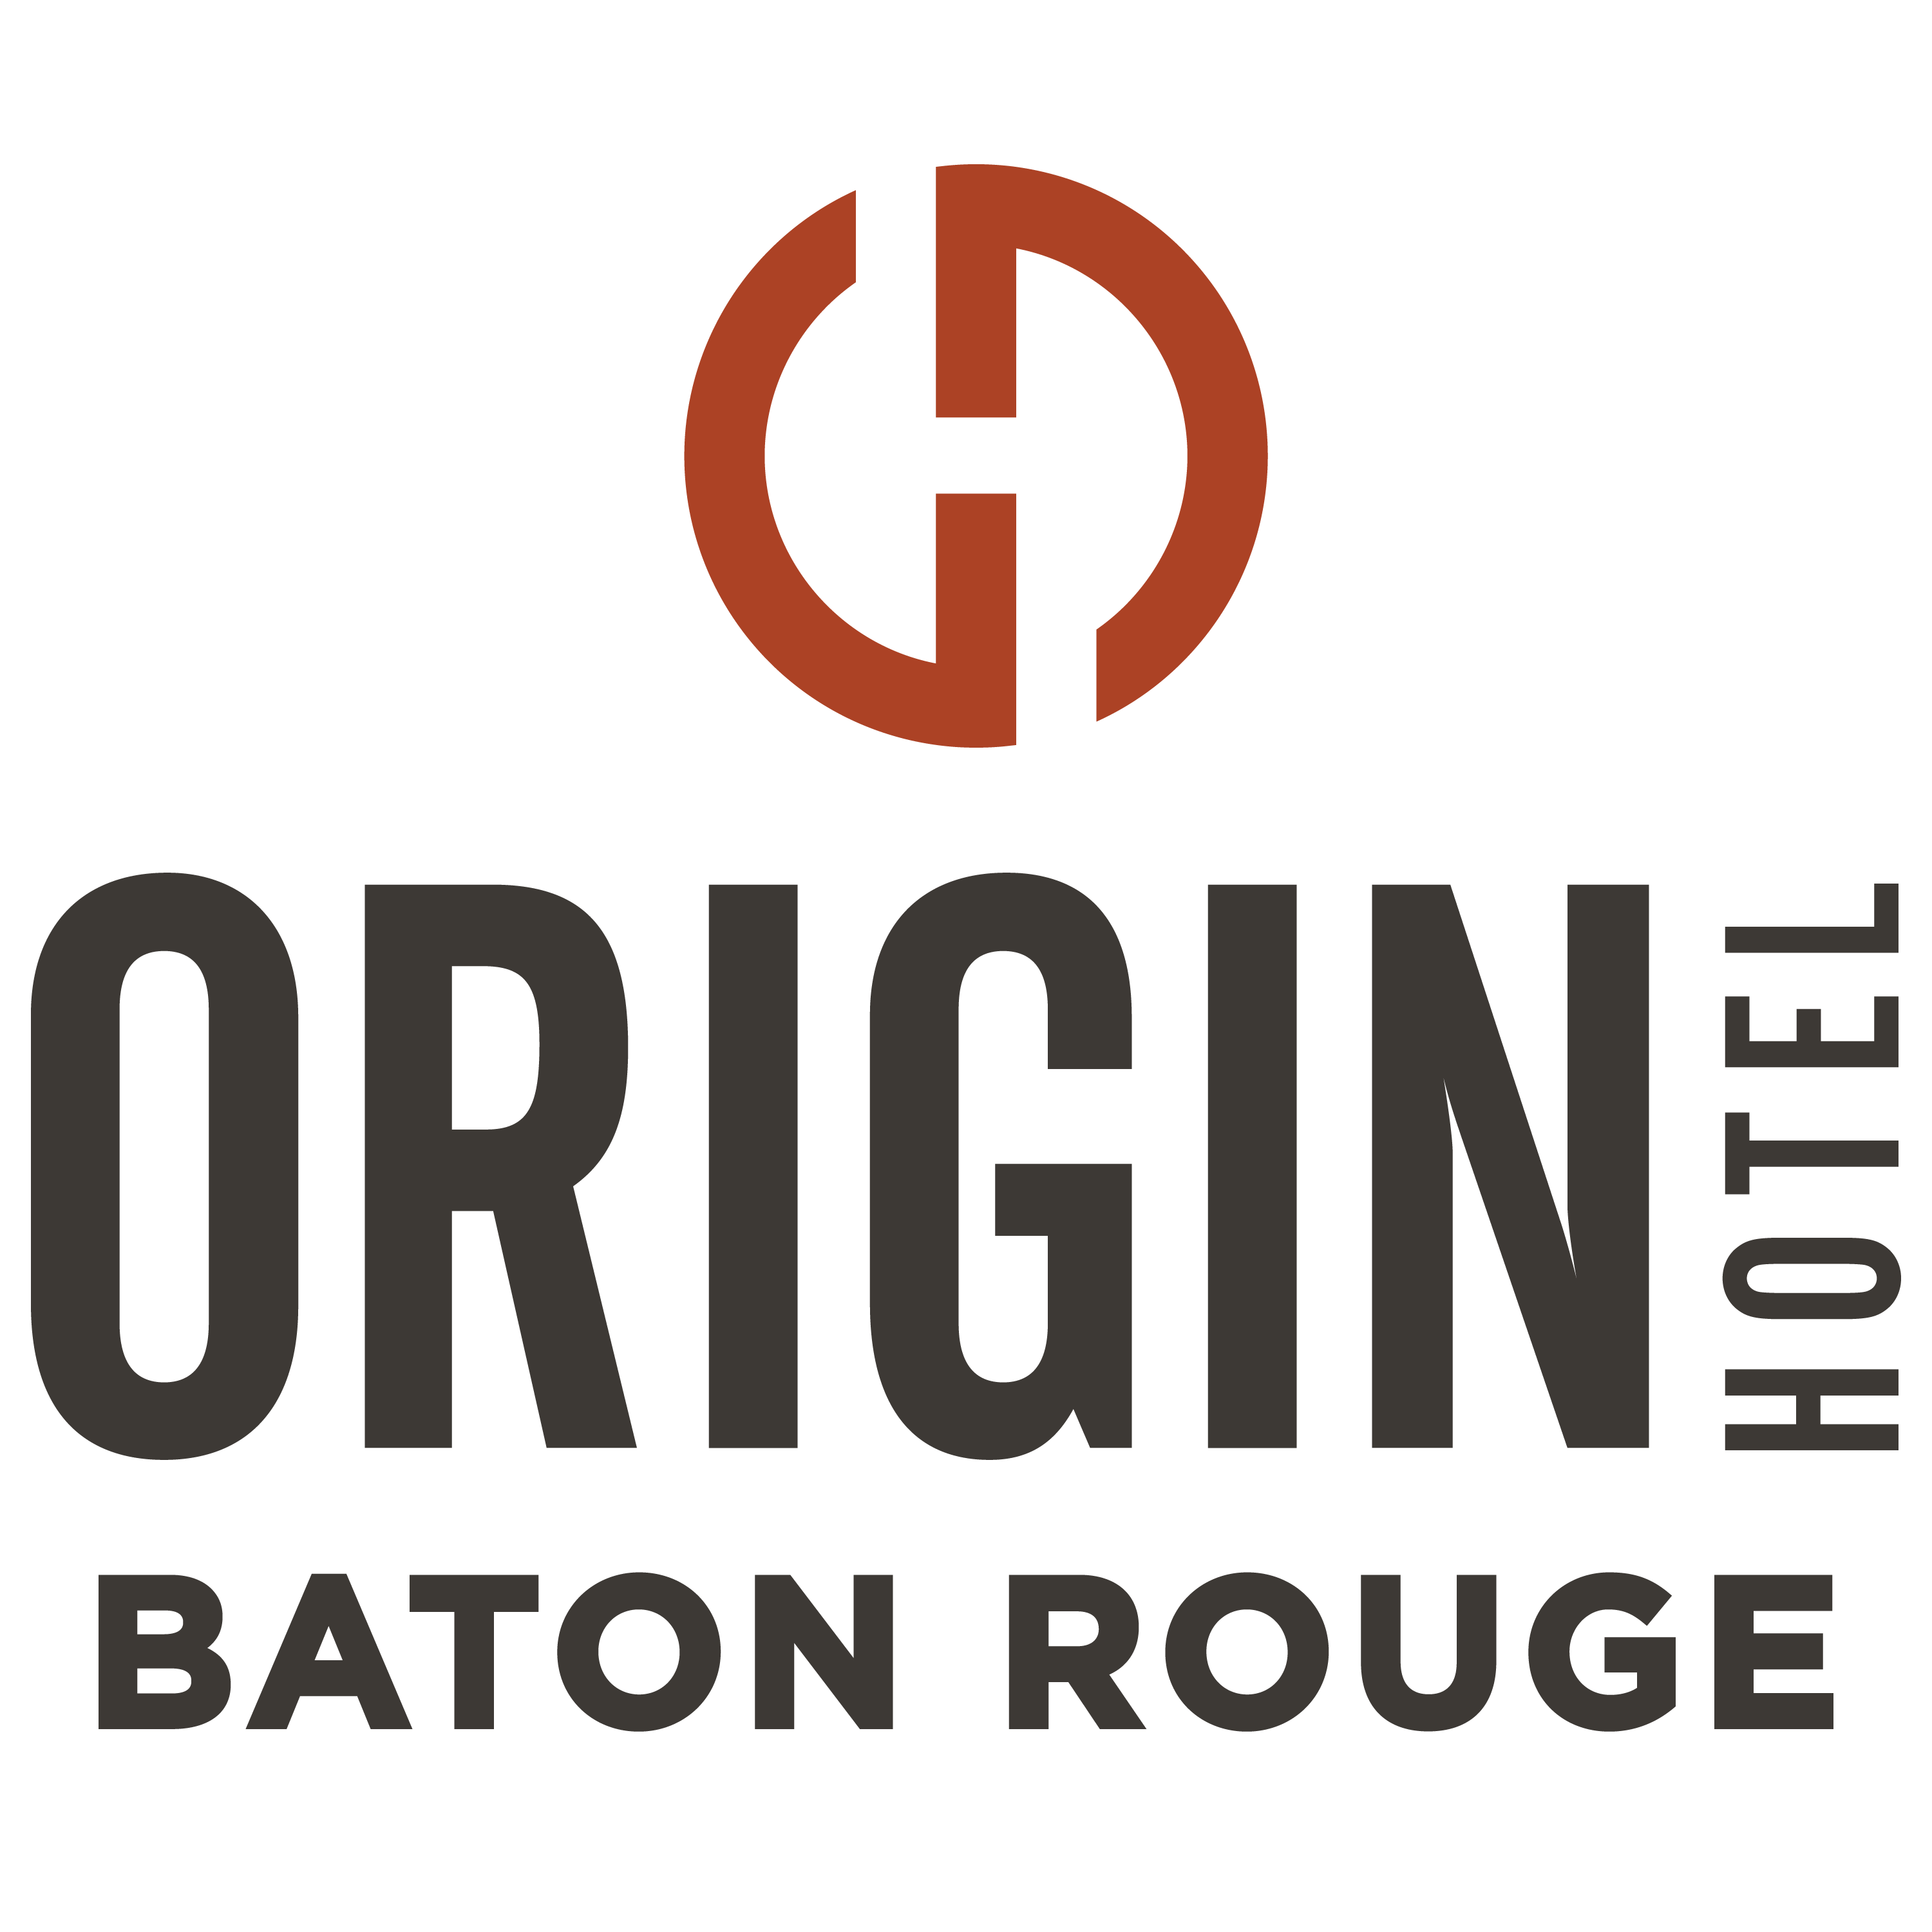 Origin Hotel Baton Rouge - Baton Rouge, LA 70802 - (225)224-0022 | ShowMeLocal.com